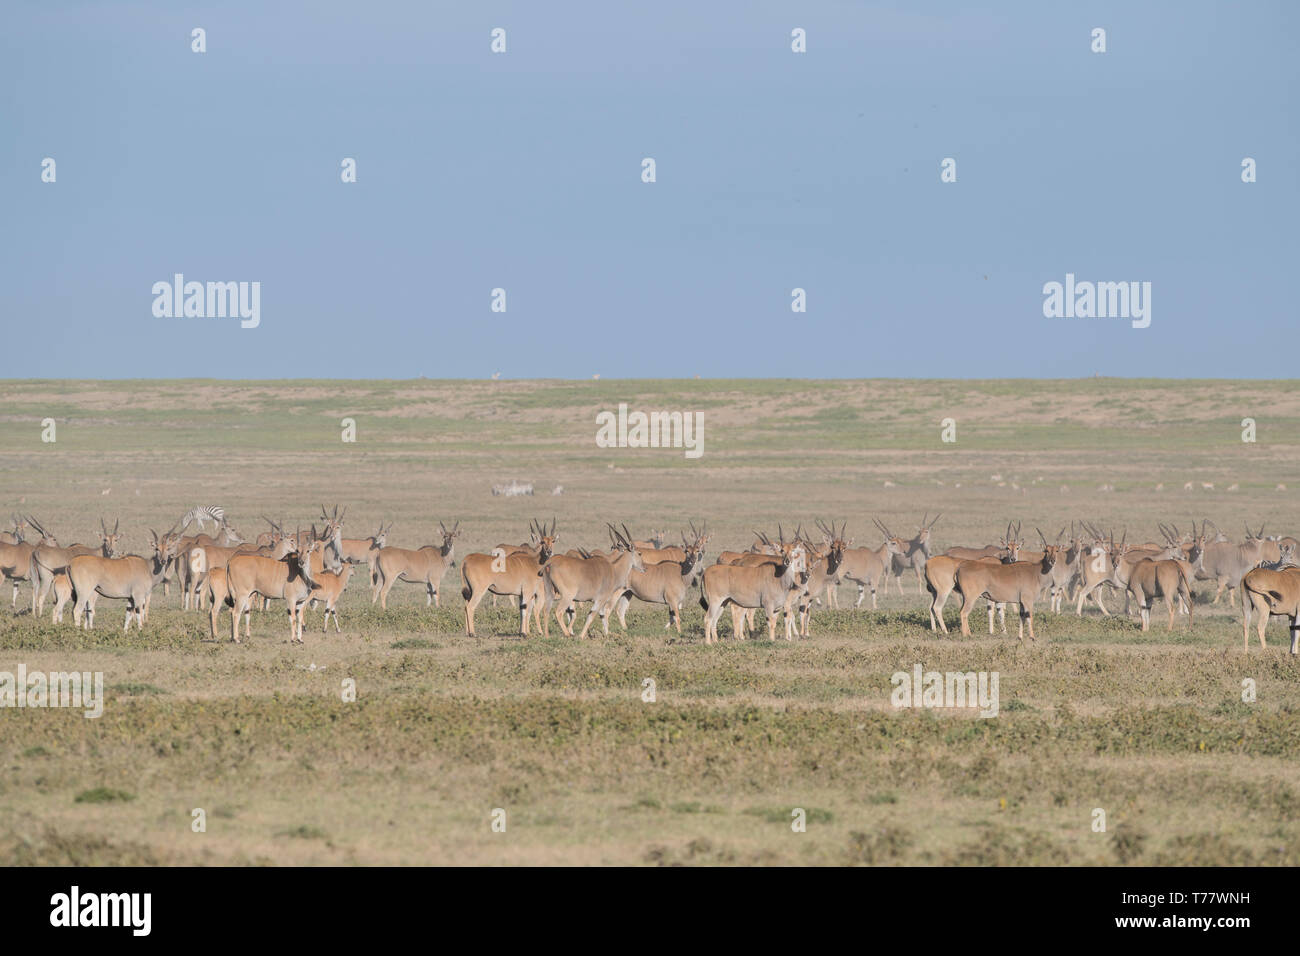 Eland herd migrating, Tanzania Stock Photo